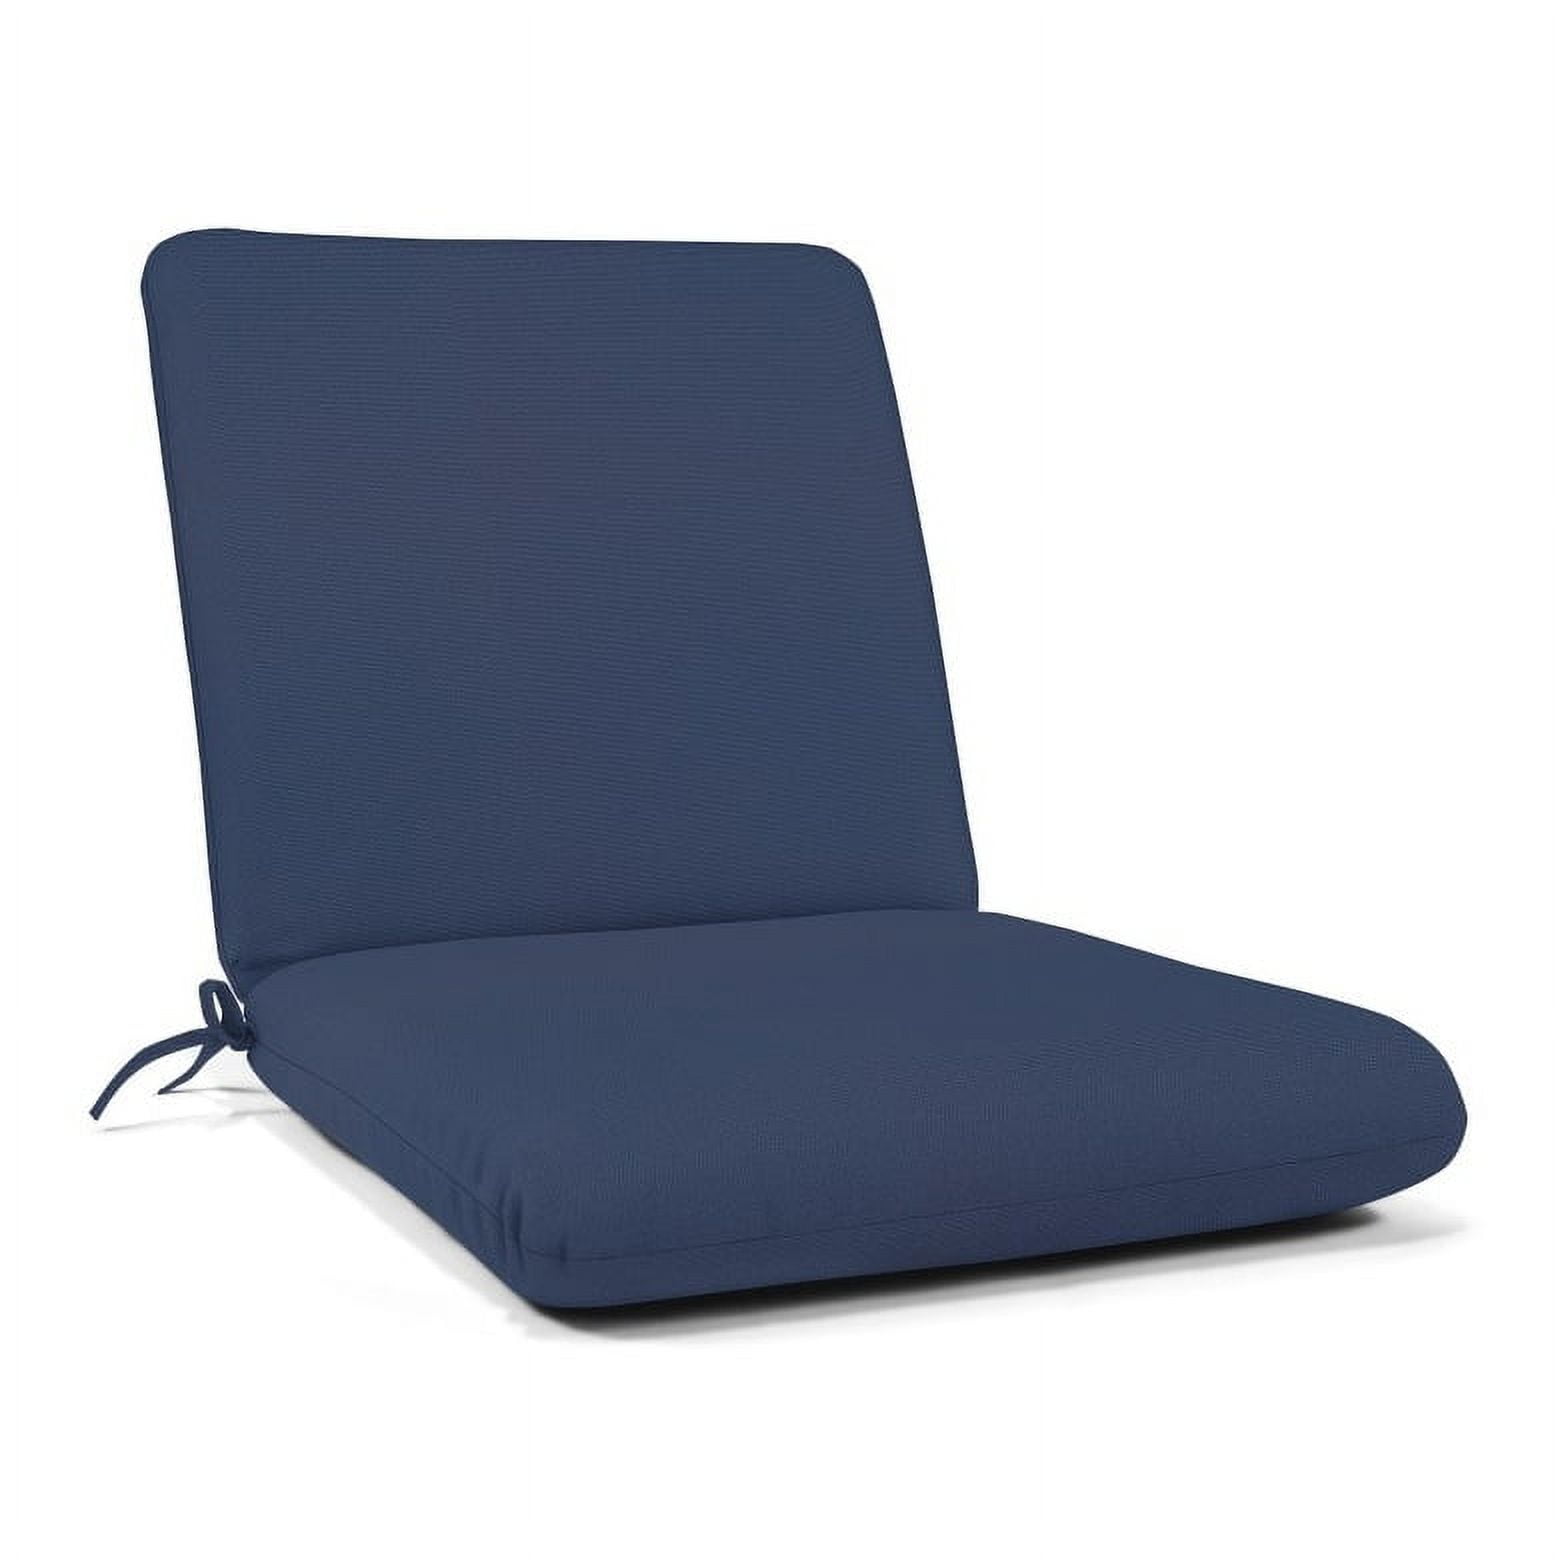 Outdoor Sunbrella Seat/Back Cushion Sand & Stable Fabric: Canvas Navy Sunbrella Canvas